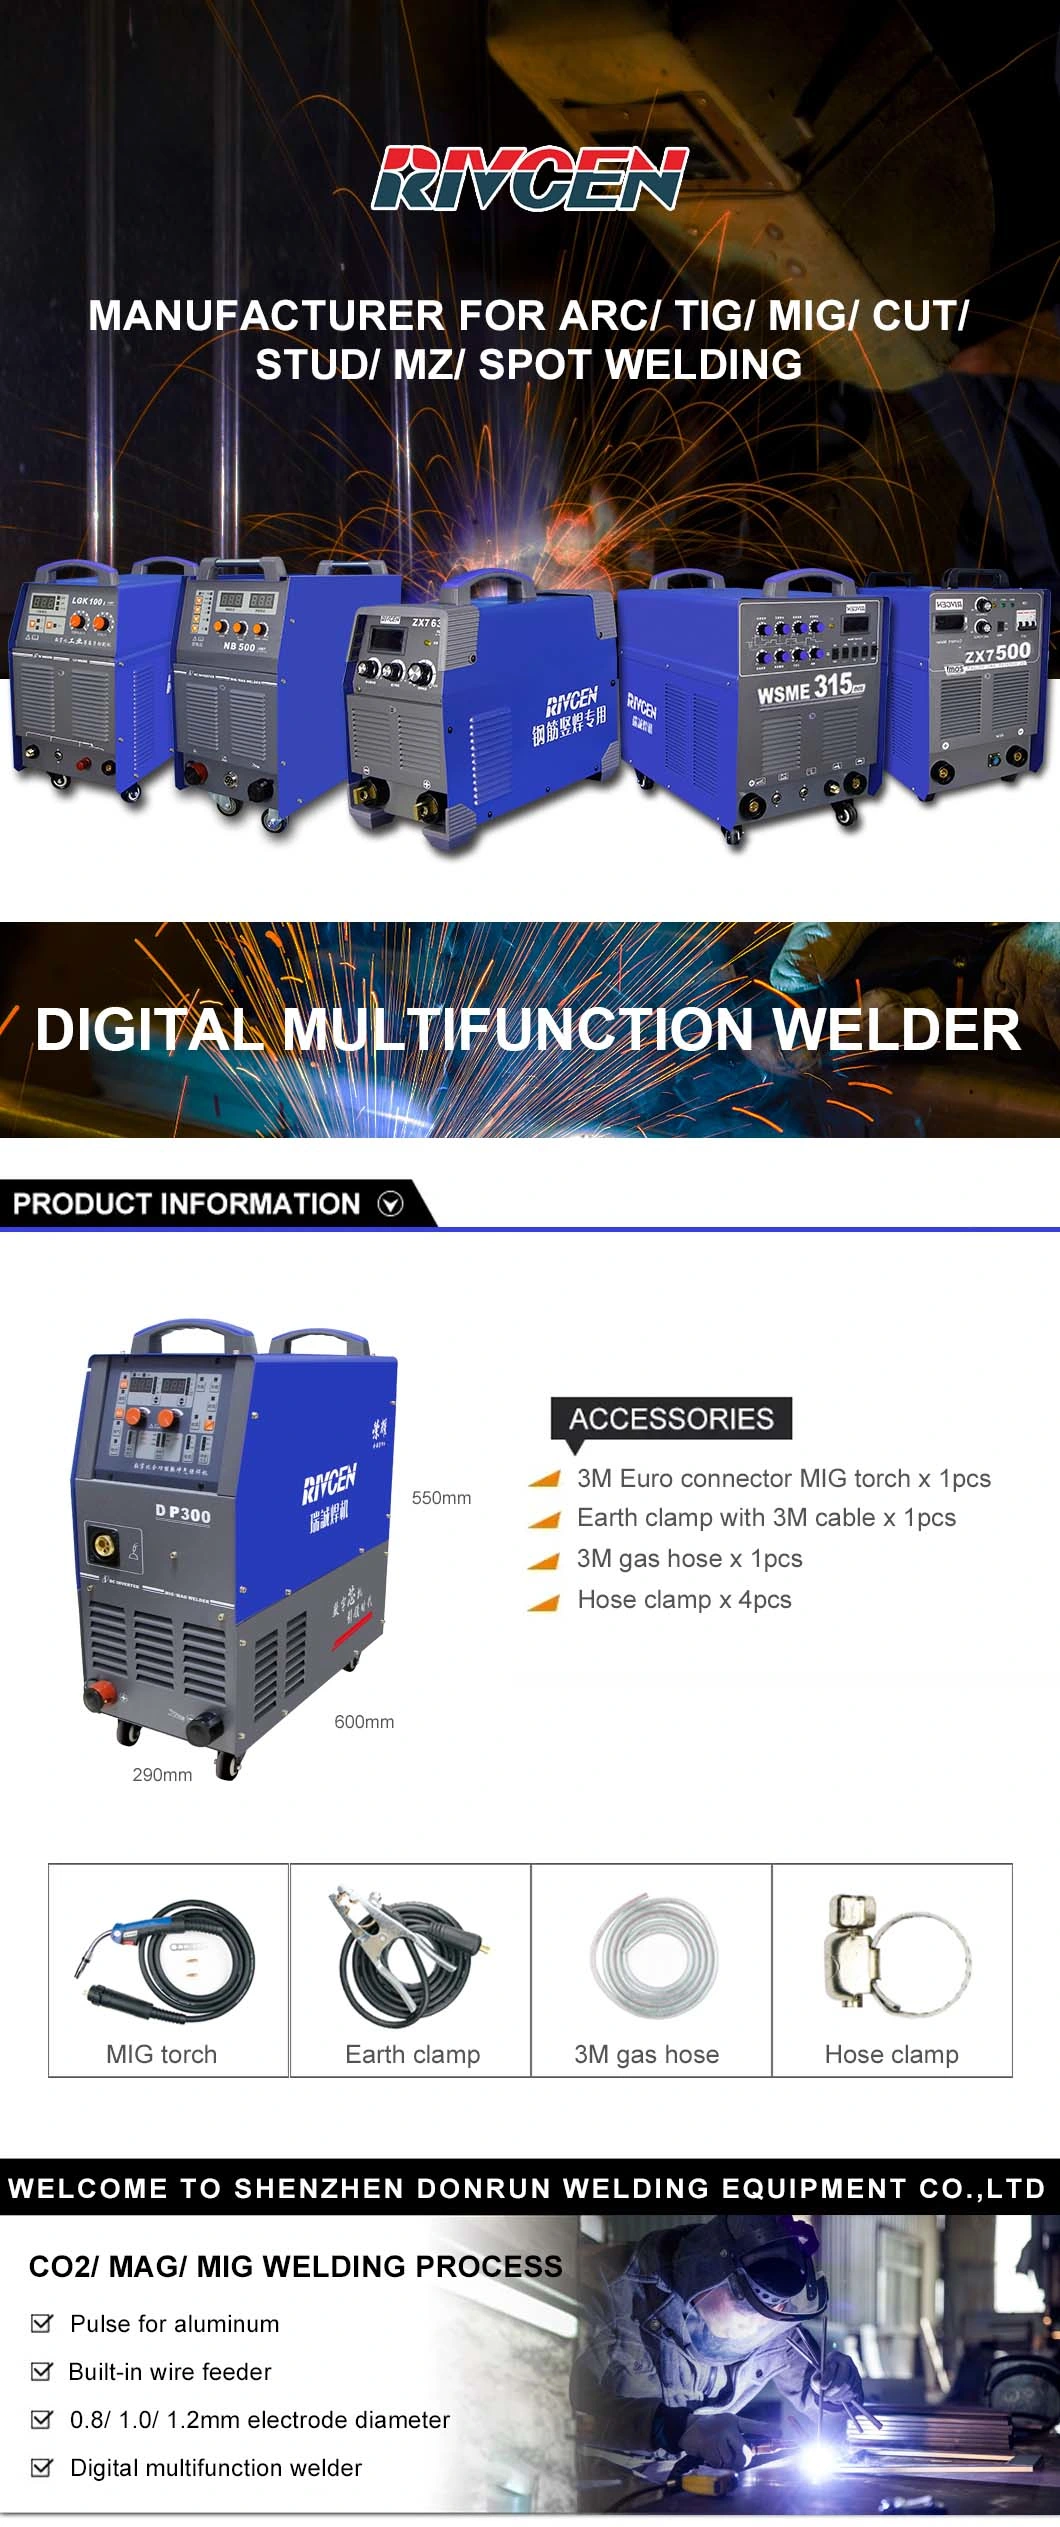 All Digital Control System Professional Pulse for Aluminum MIG Welding Machine